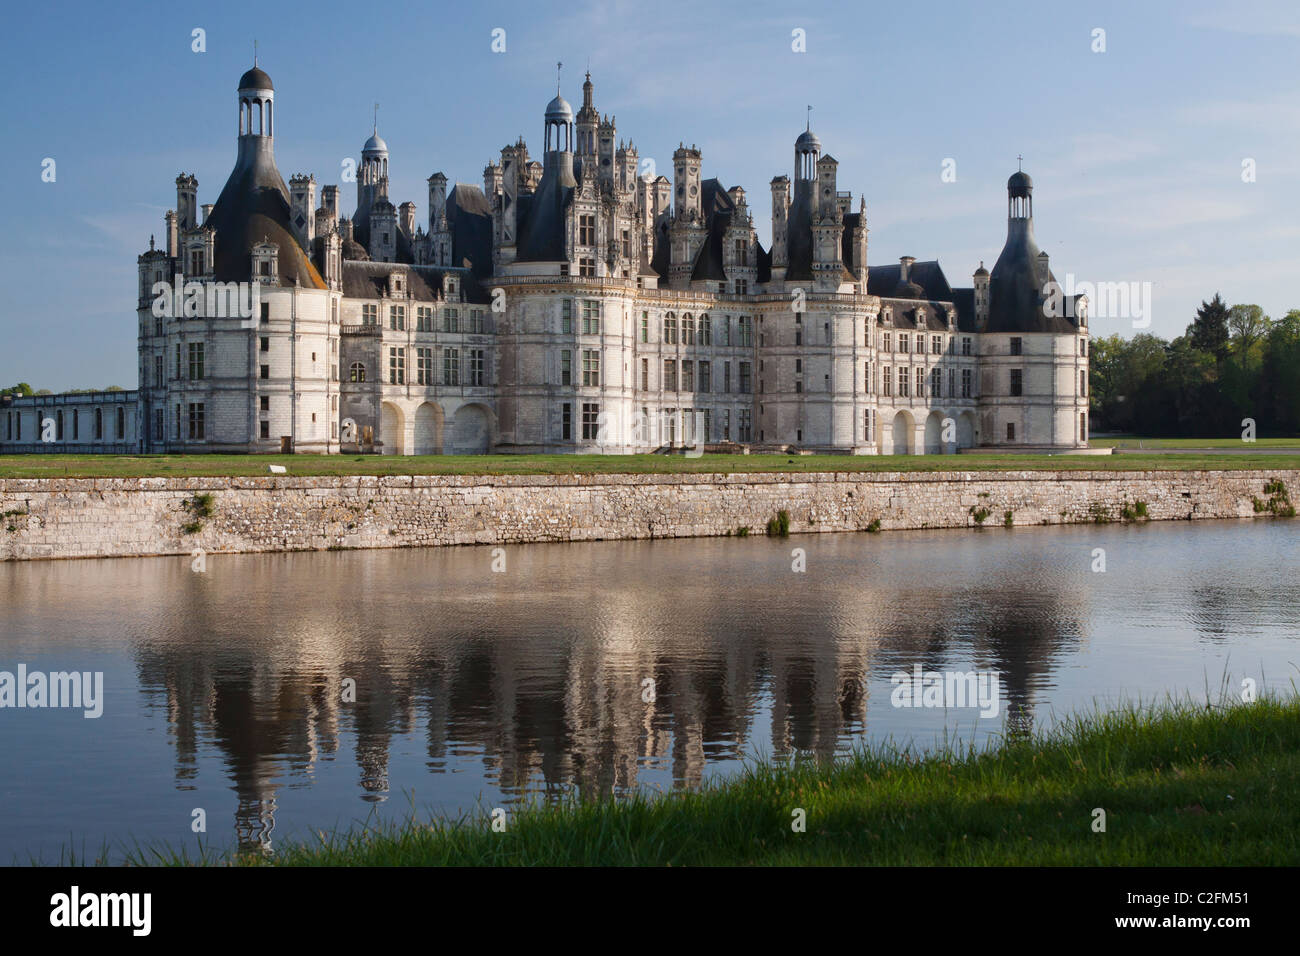 Royal Château de Chambord, France Stock Photo